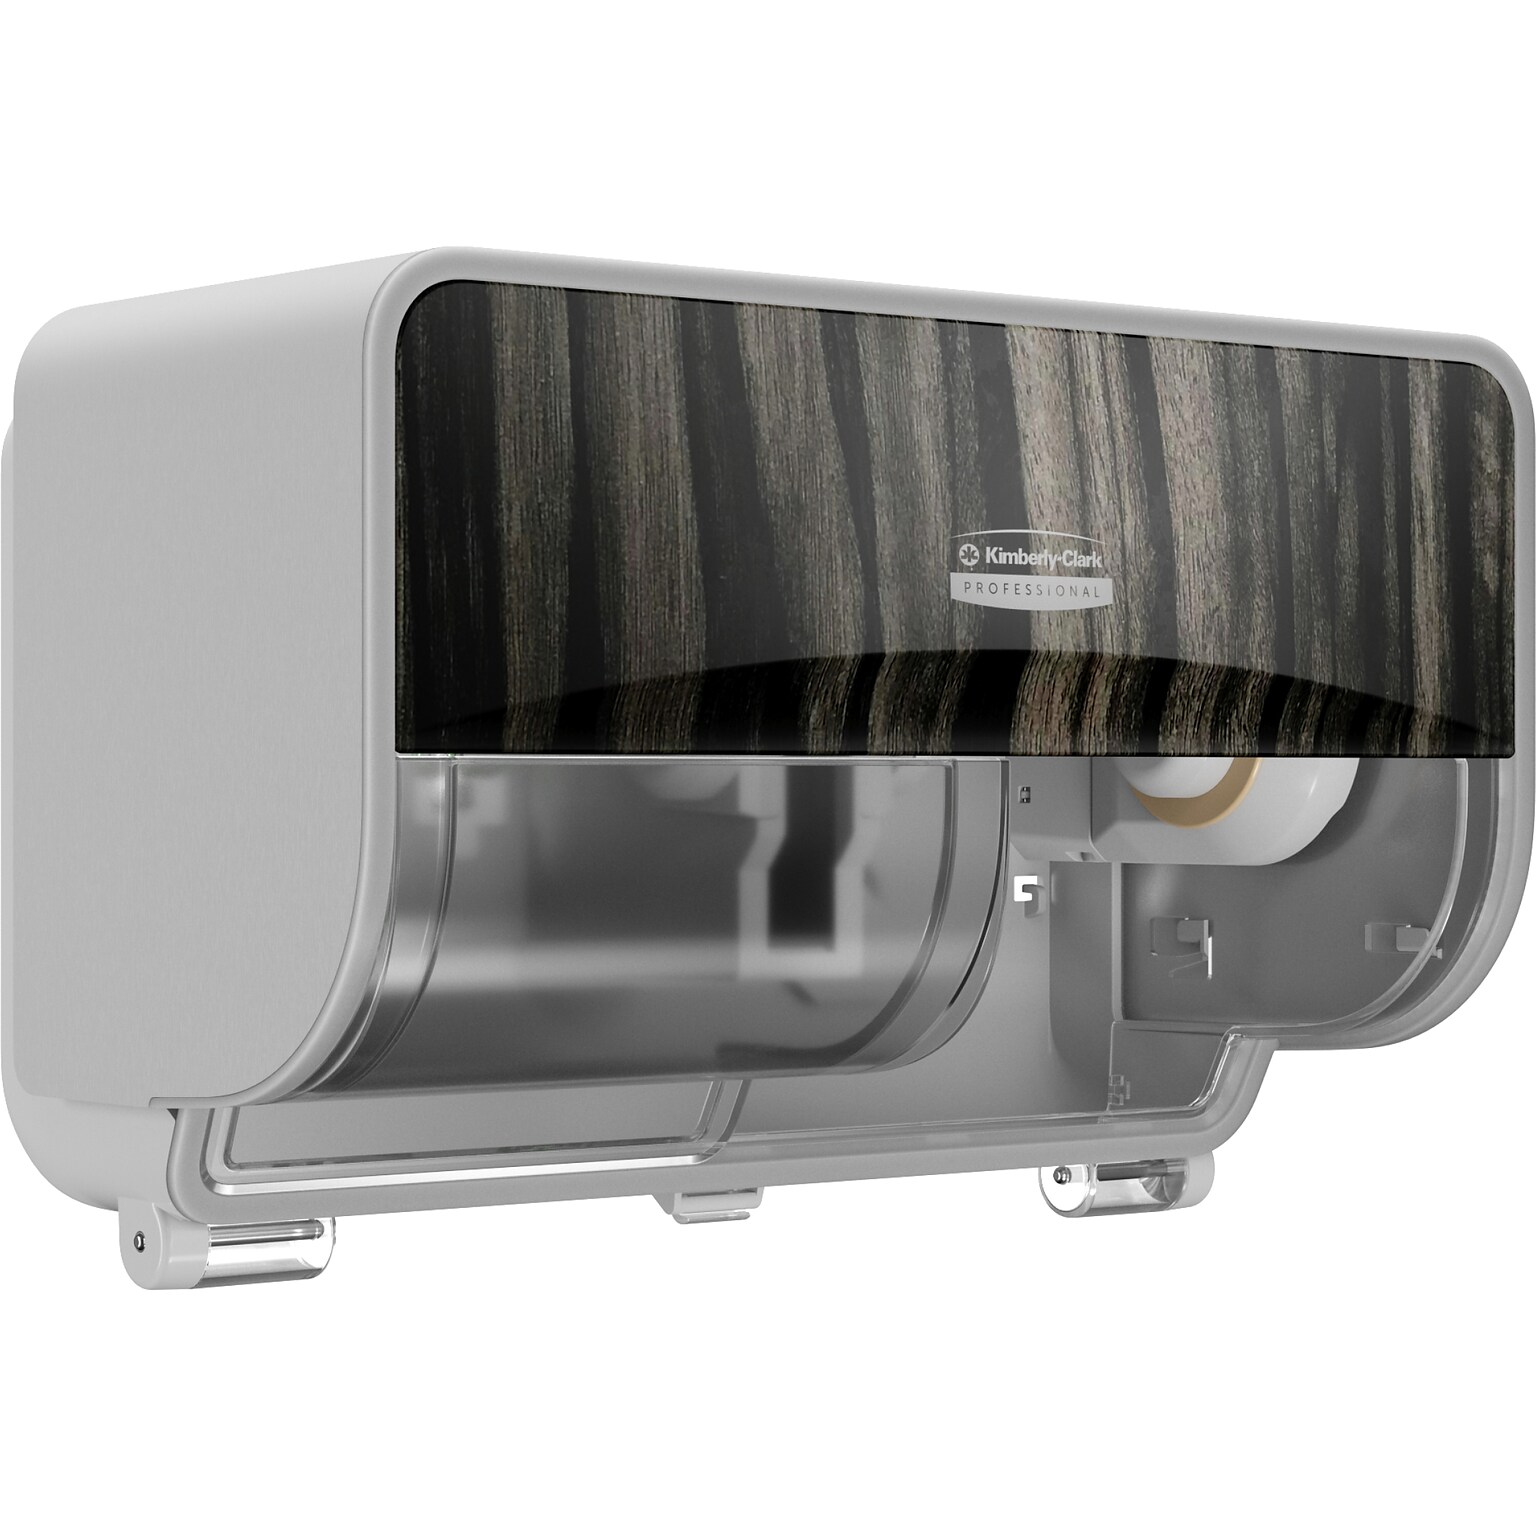 Kimberly-Clark Professional ICON Coreless 2-Roll Horizontal Toilet Paper Dispenser with Faceplate, Ebony Wood Grain (58752)